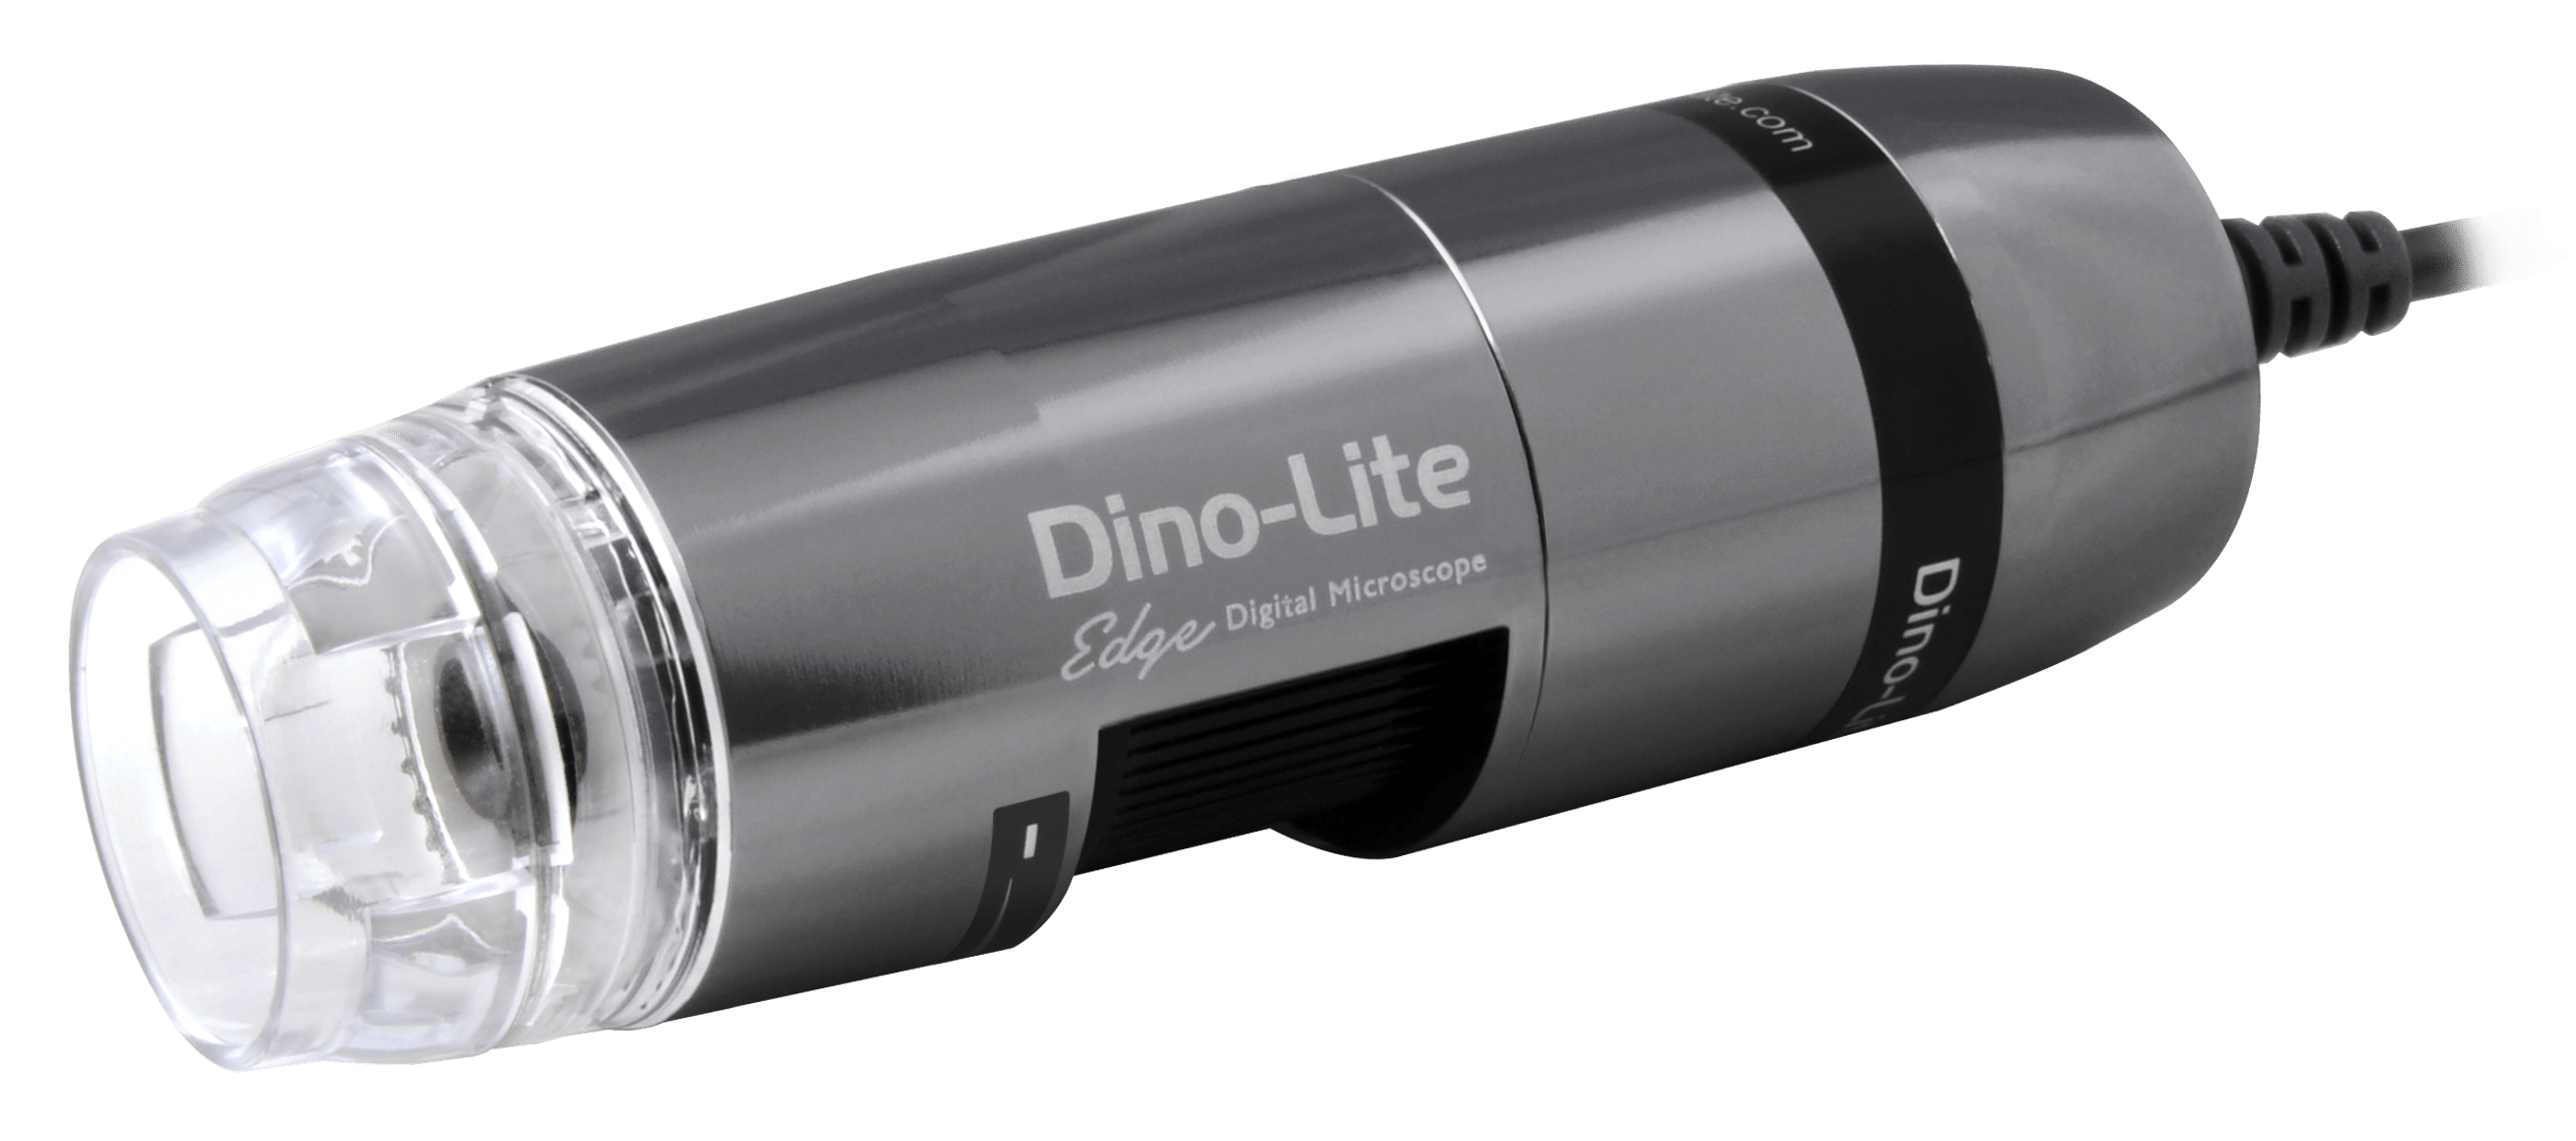 Dino-Lite Edge AM7515MT4A Digital Microscope